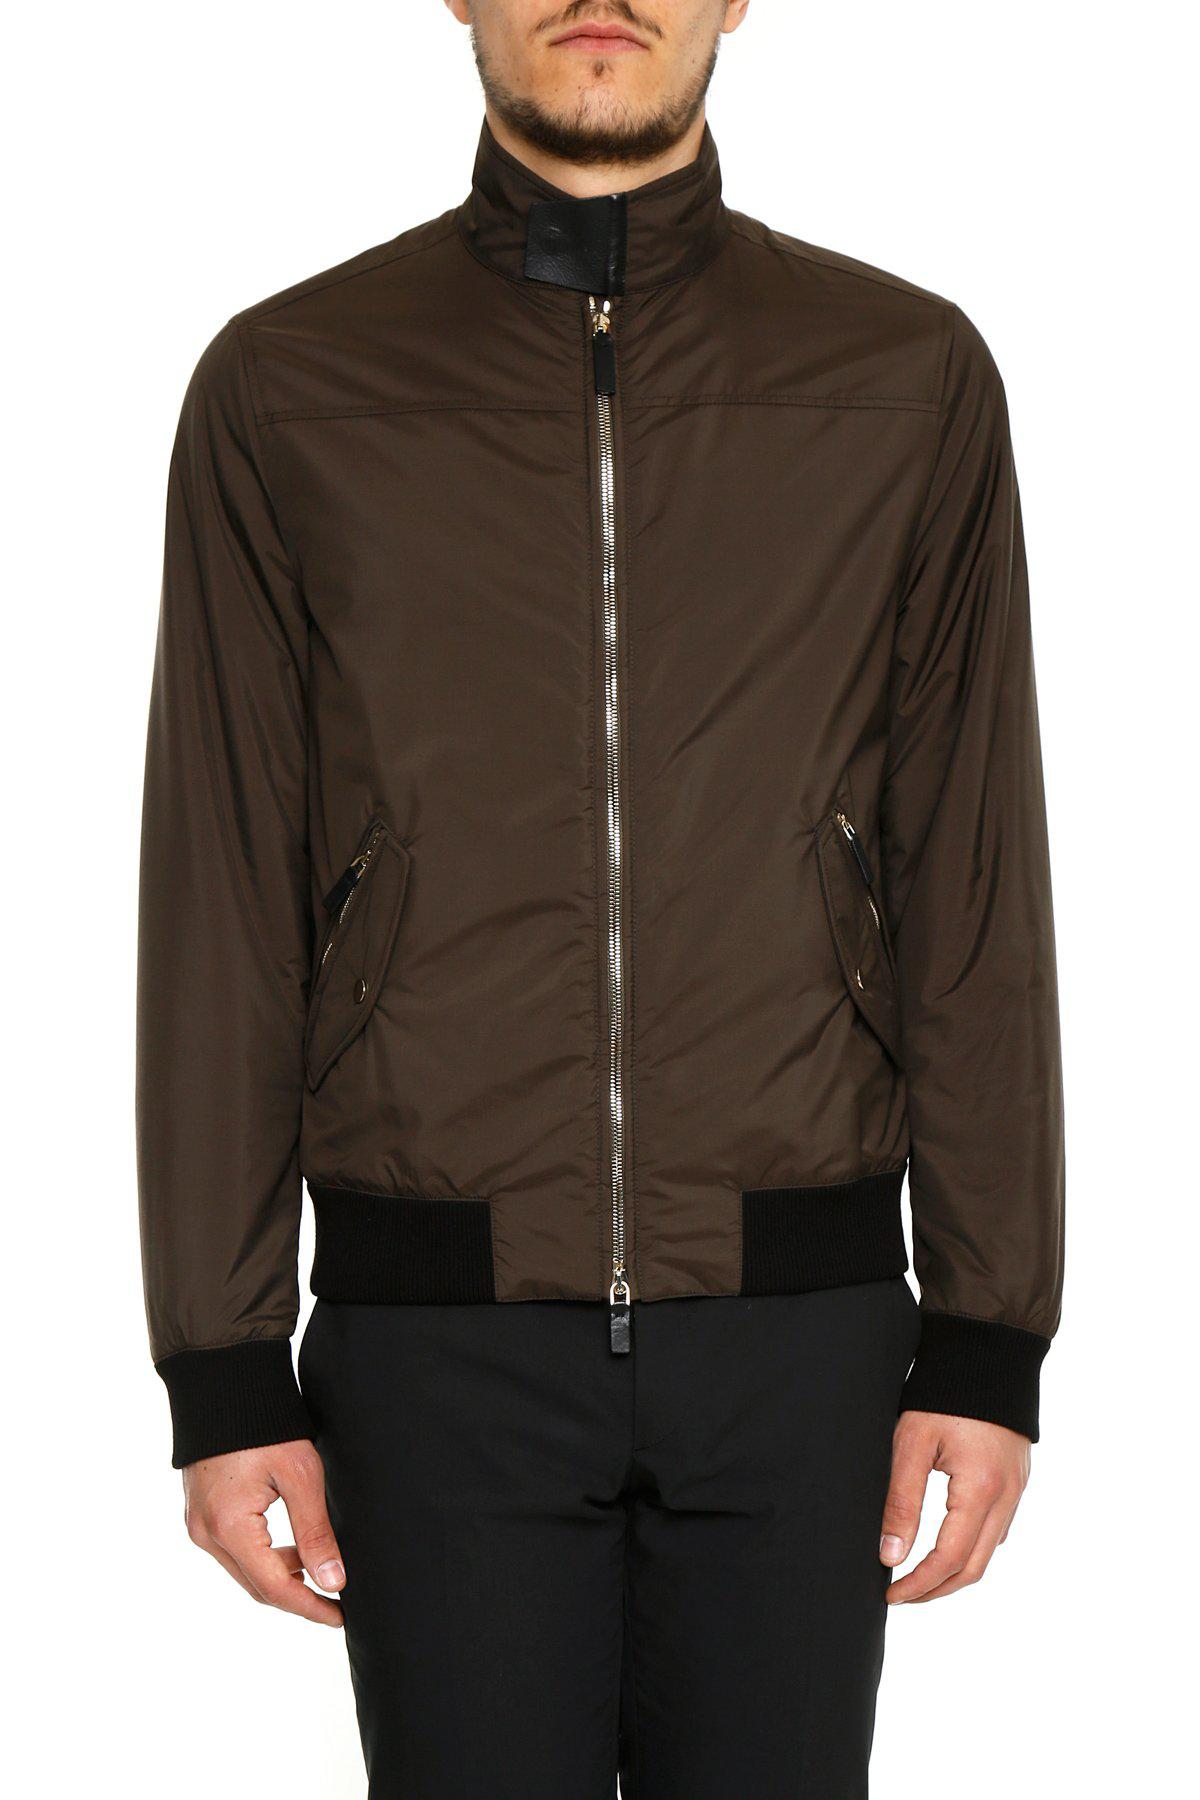 Valentino High Collar Zip Bomber Jacket in Brown for Men - Lyst